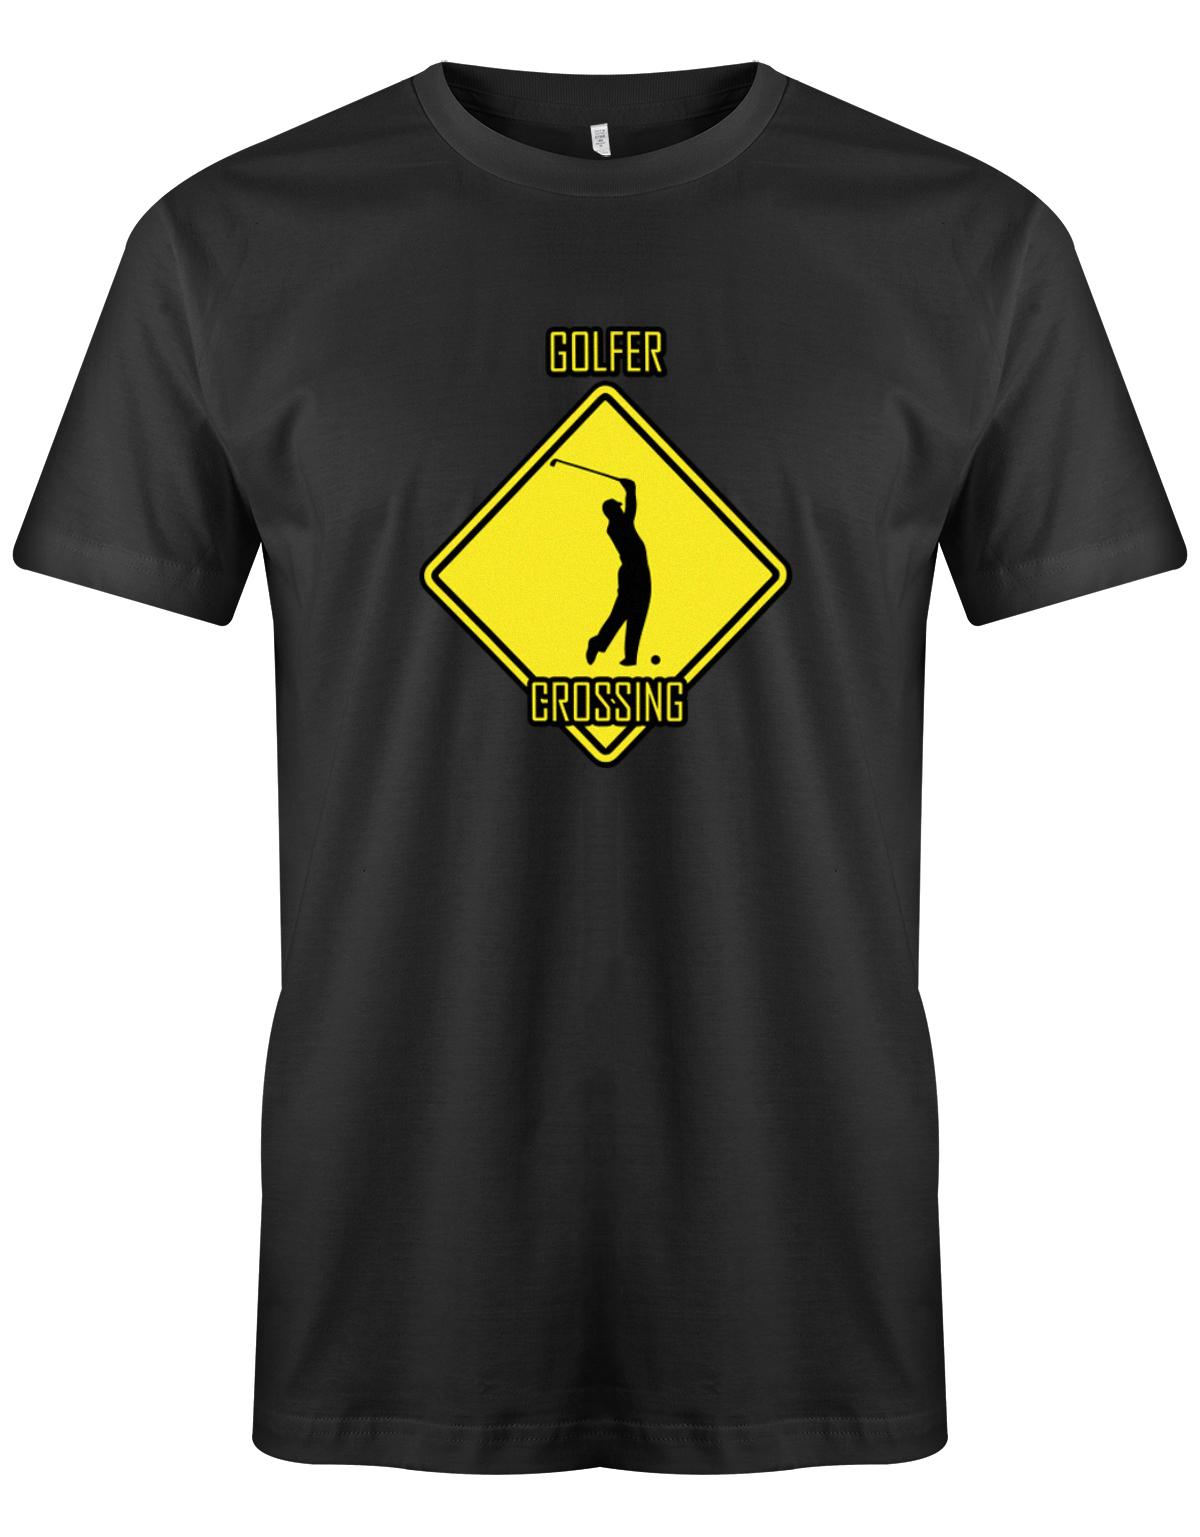 Golfer-Crossing-Herren-Shirt-SChwarz